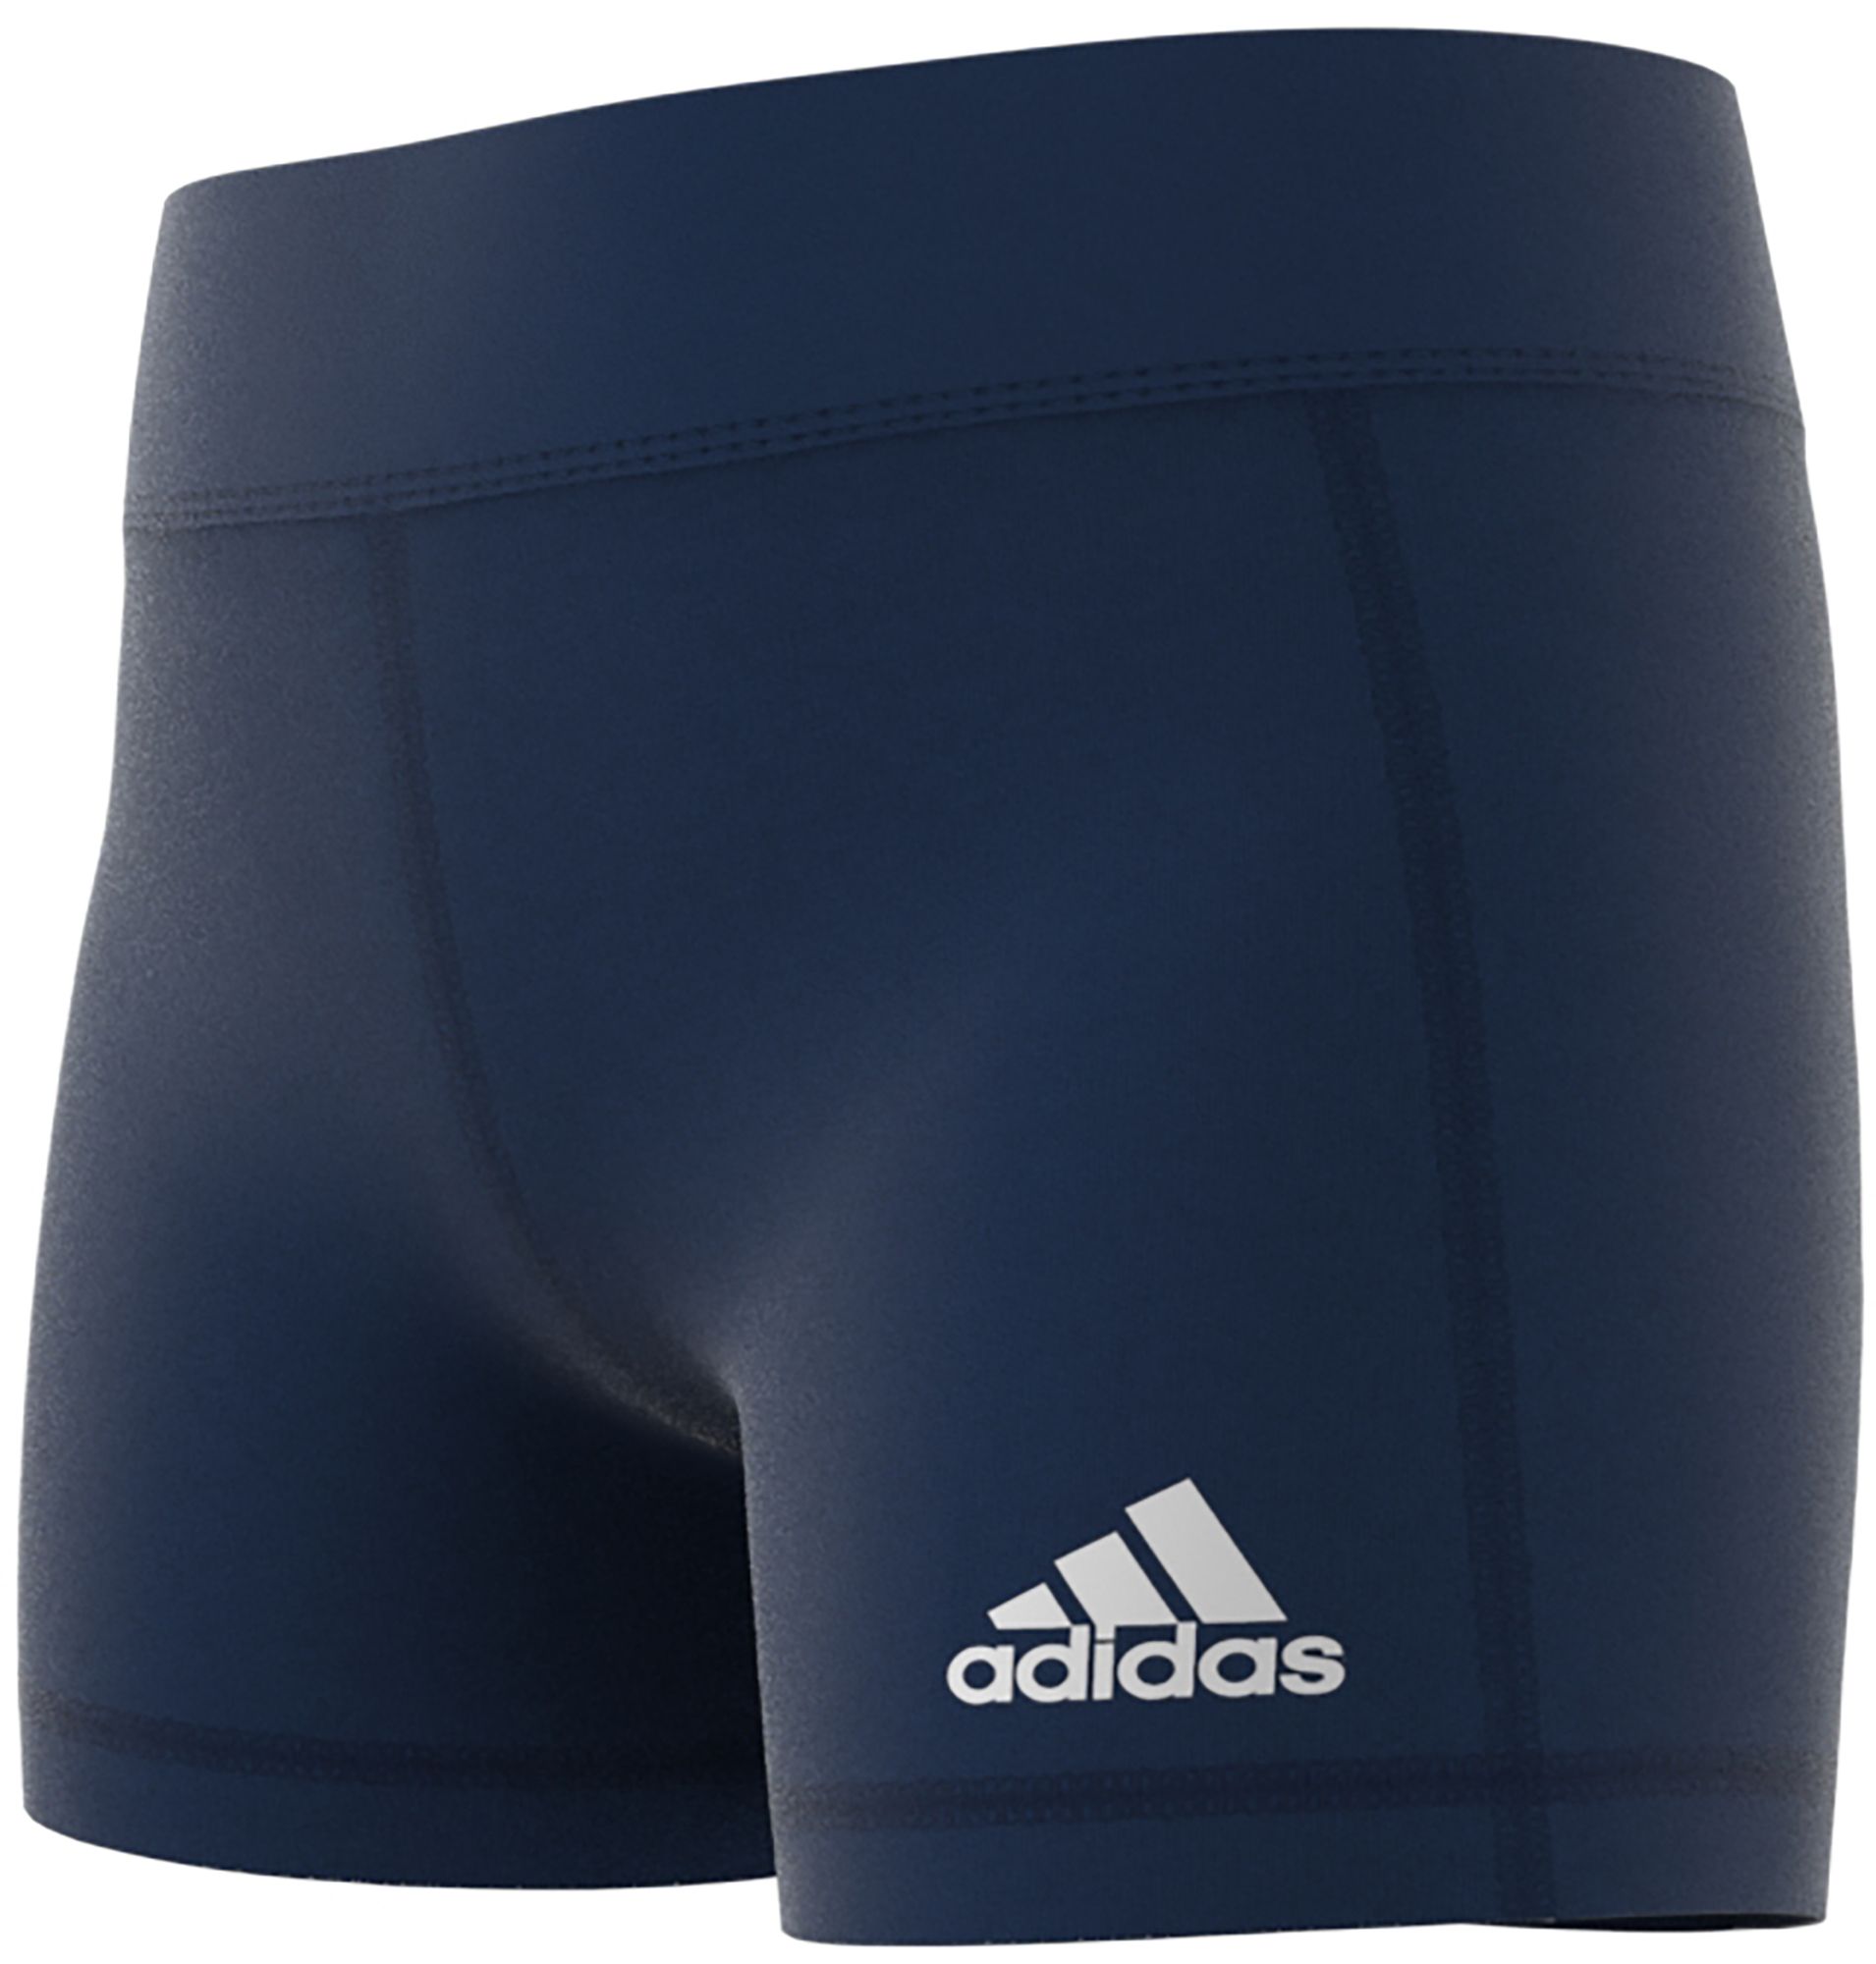 Adidas / Women's Alphaskin Volleyball Shorts